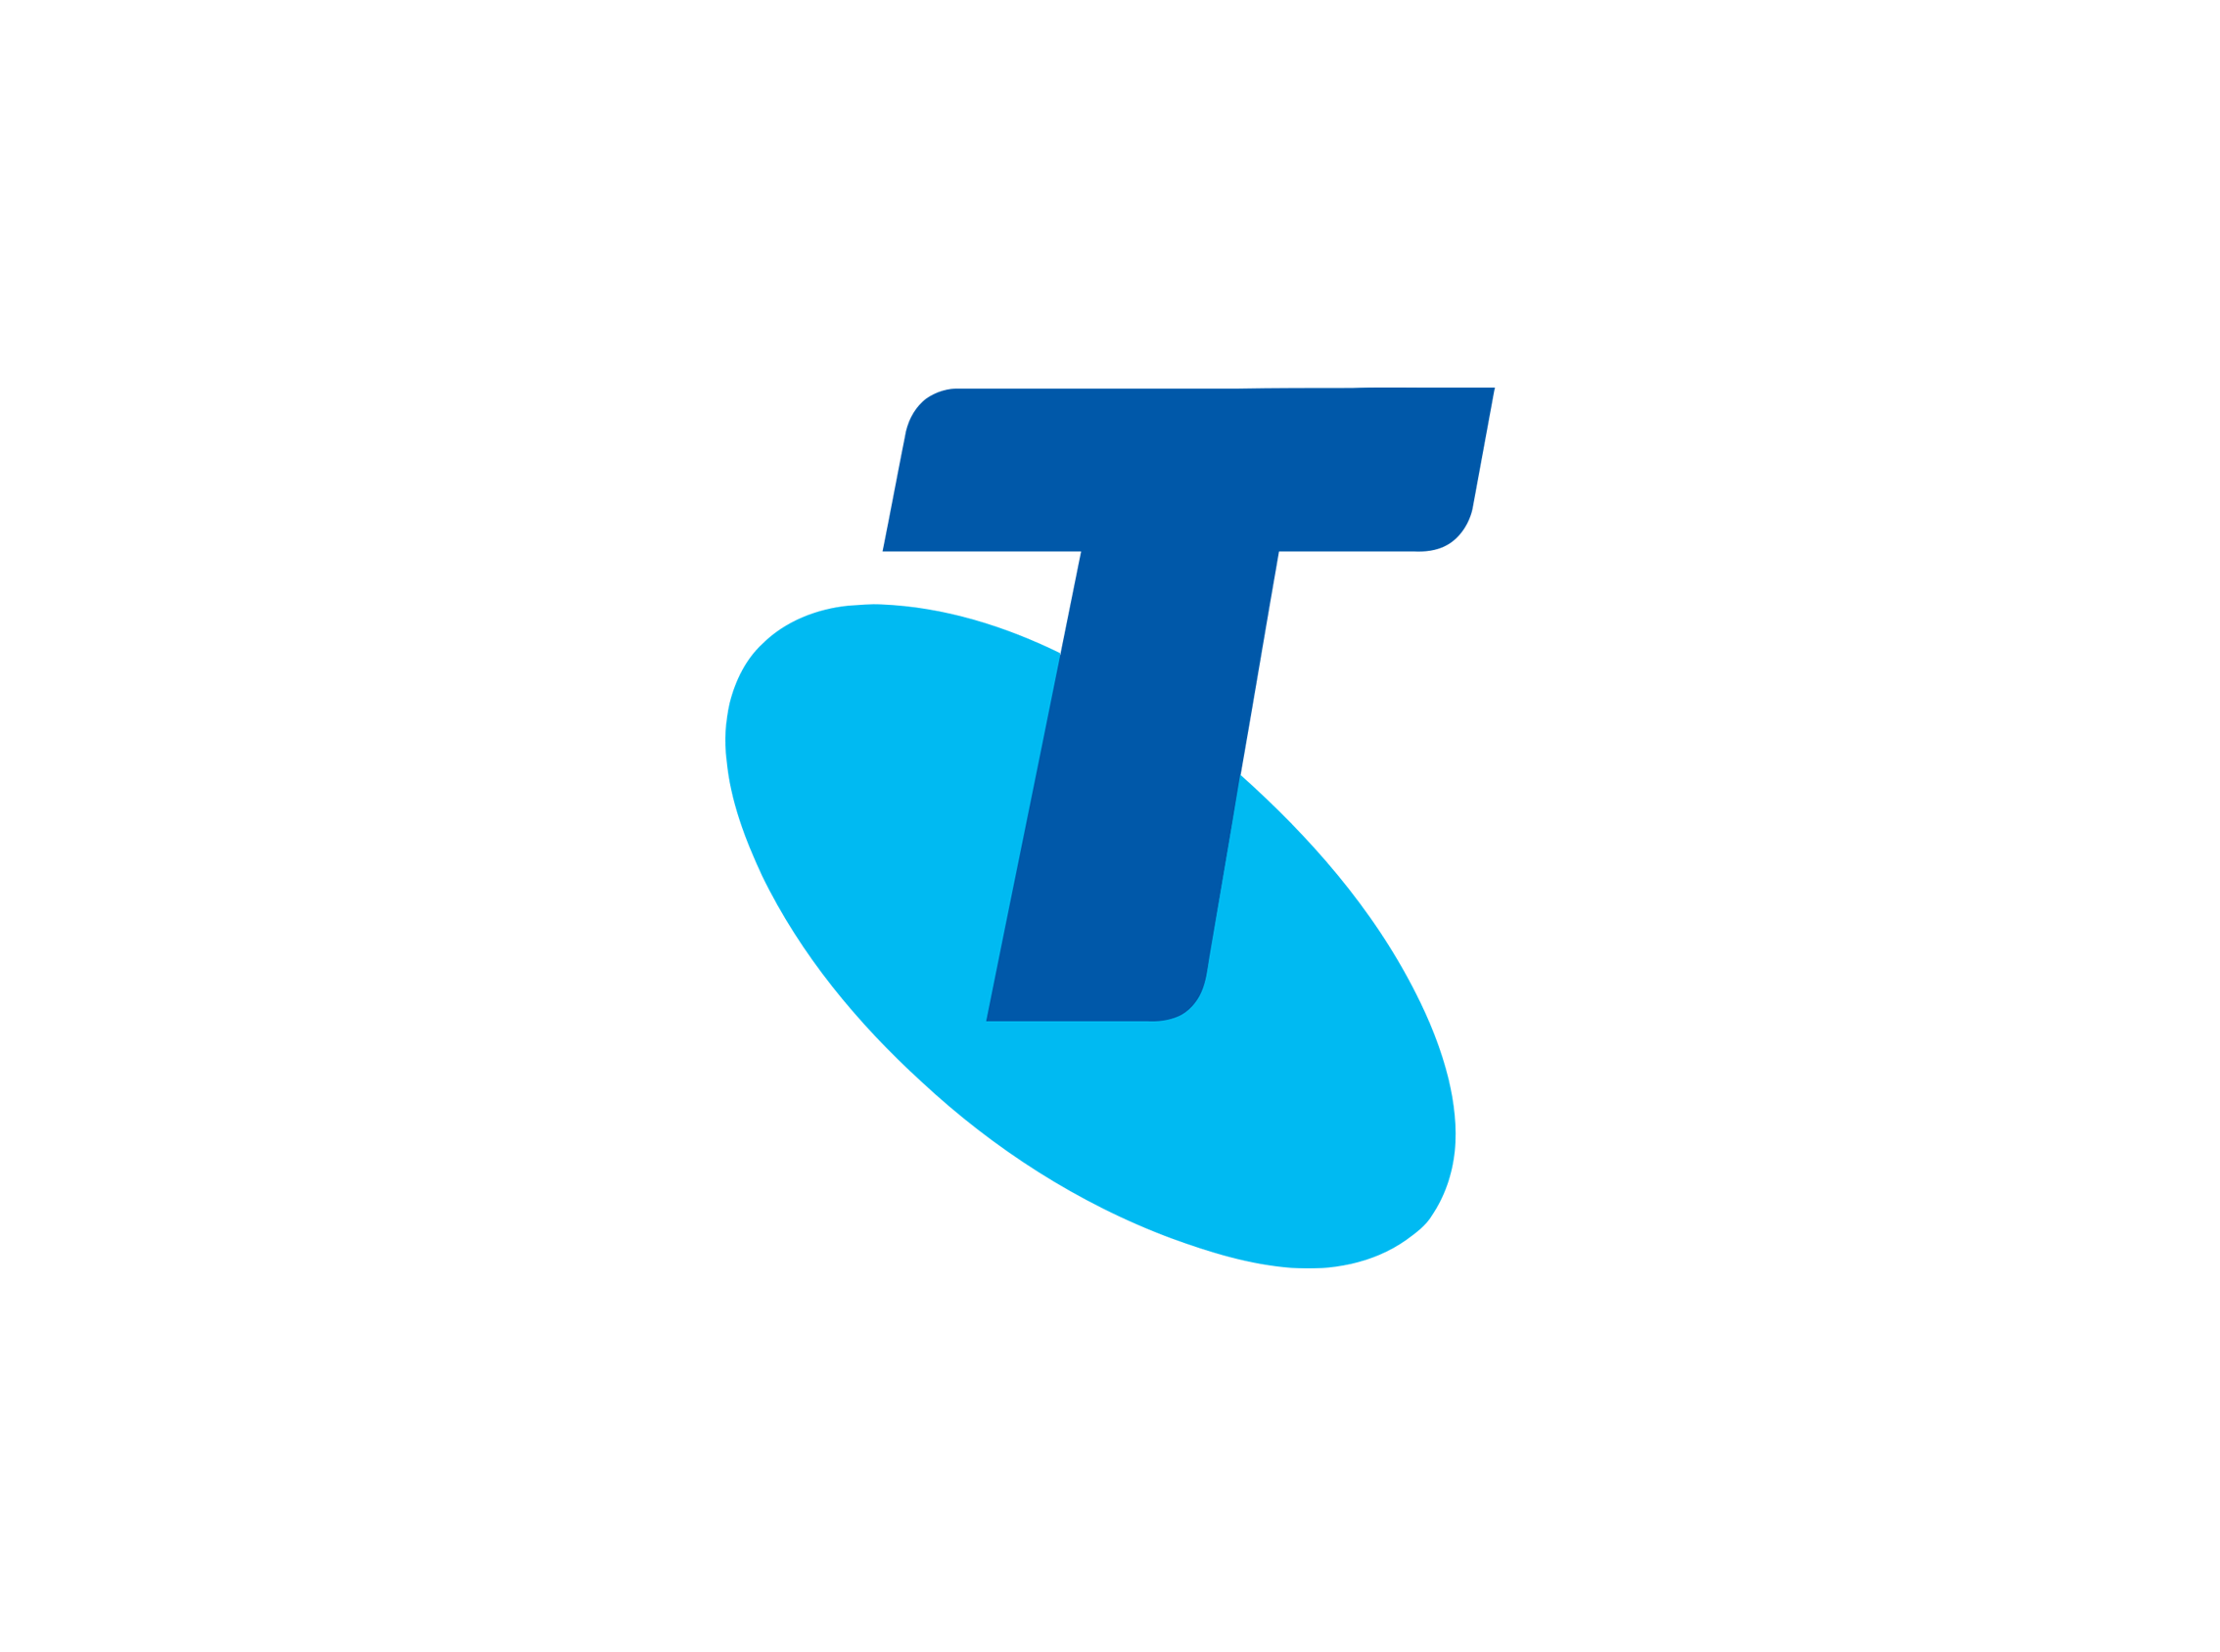 Telstra-logo-2011-blue.png